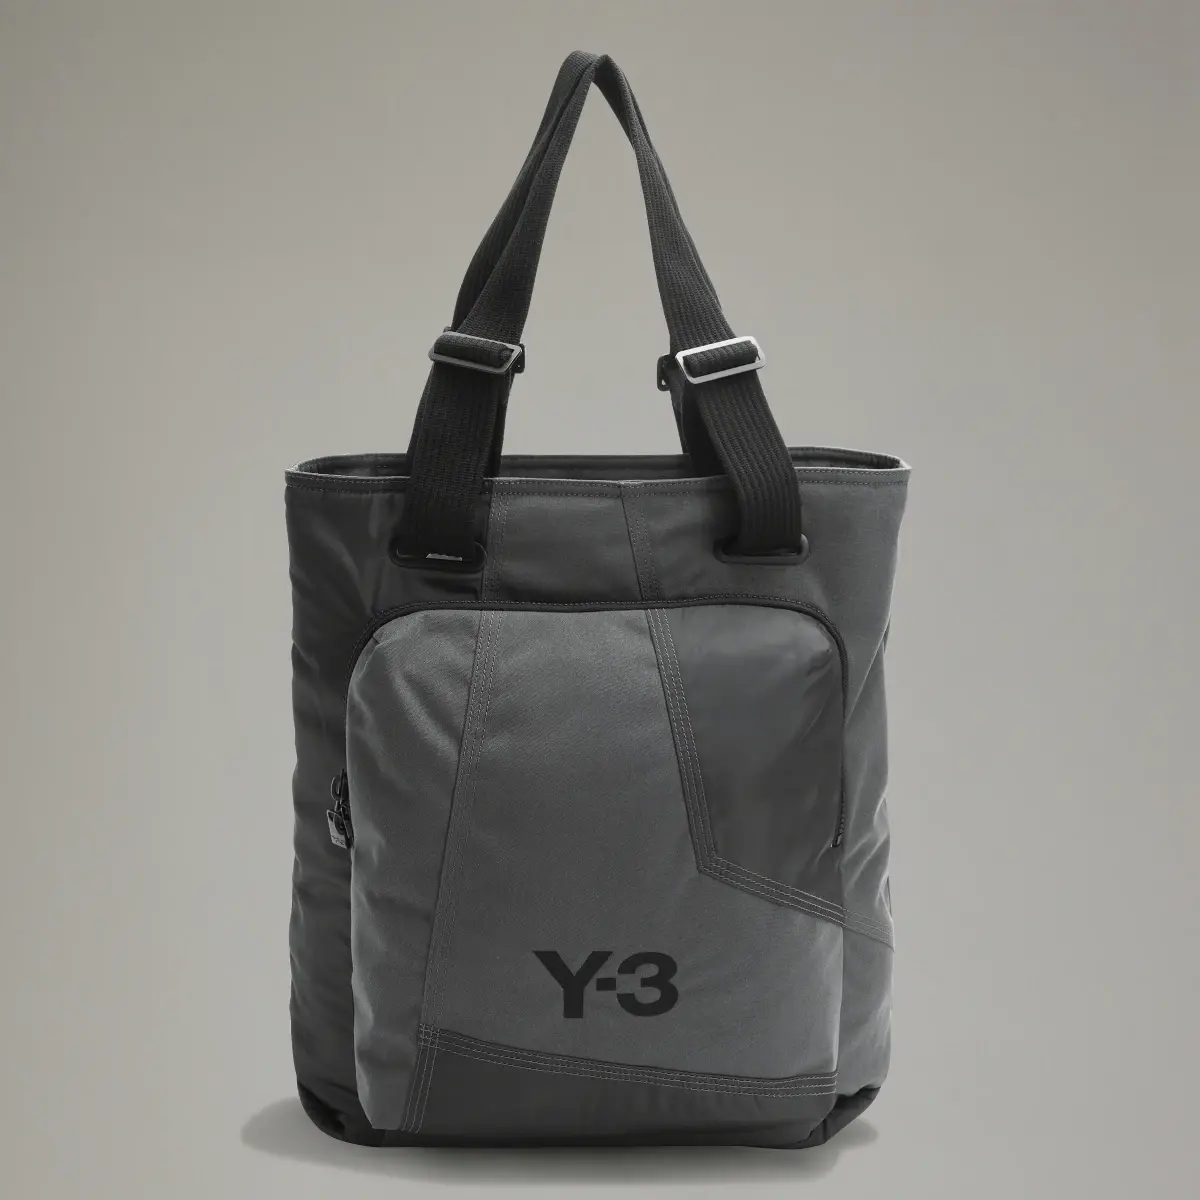 Adidas Y-3 Classic Tote Bag. 1